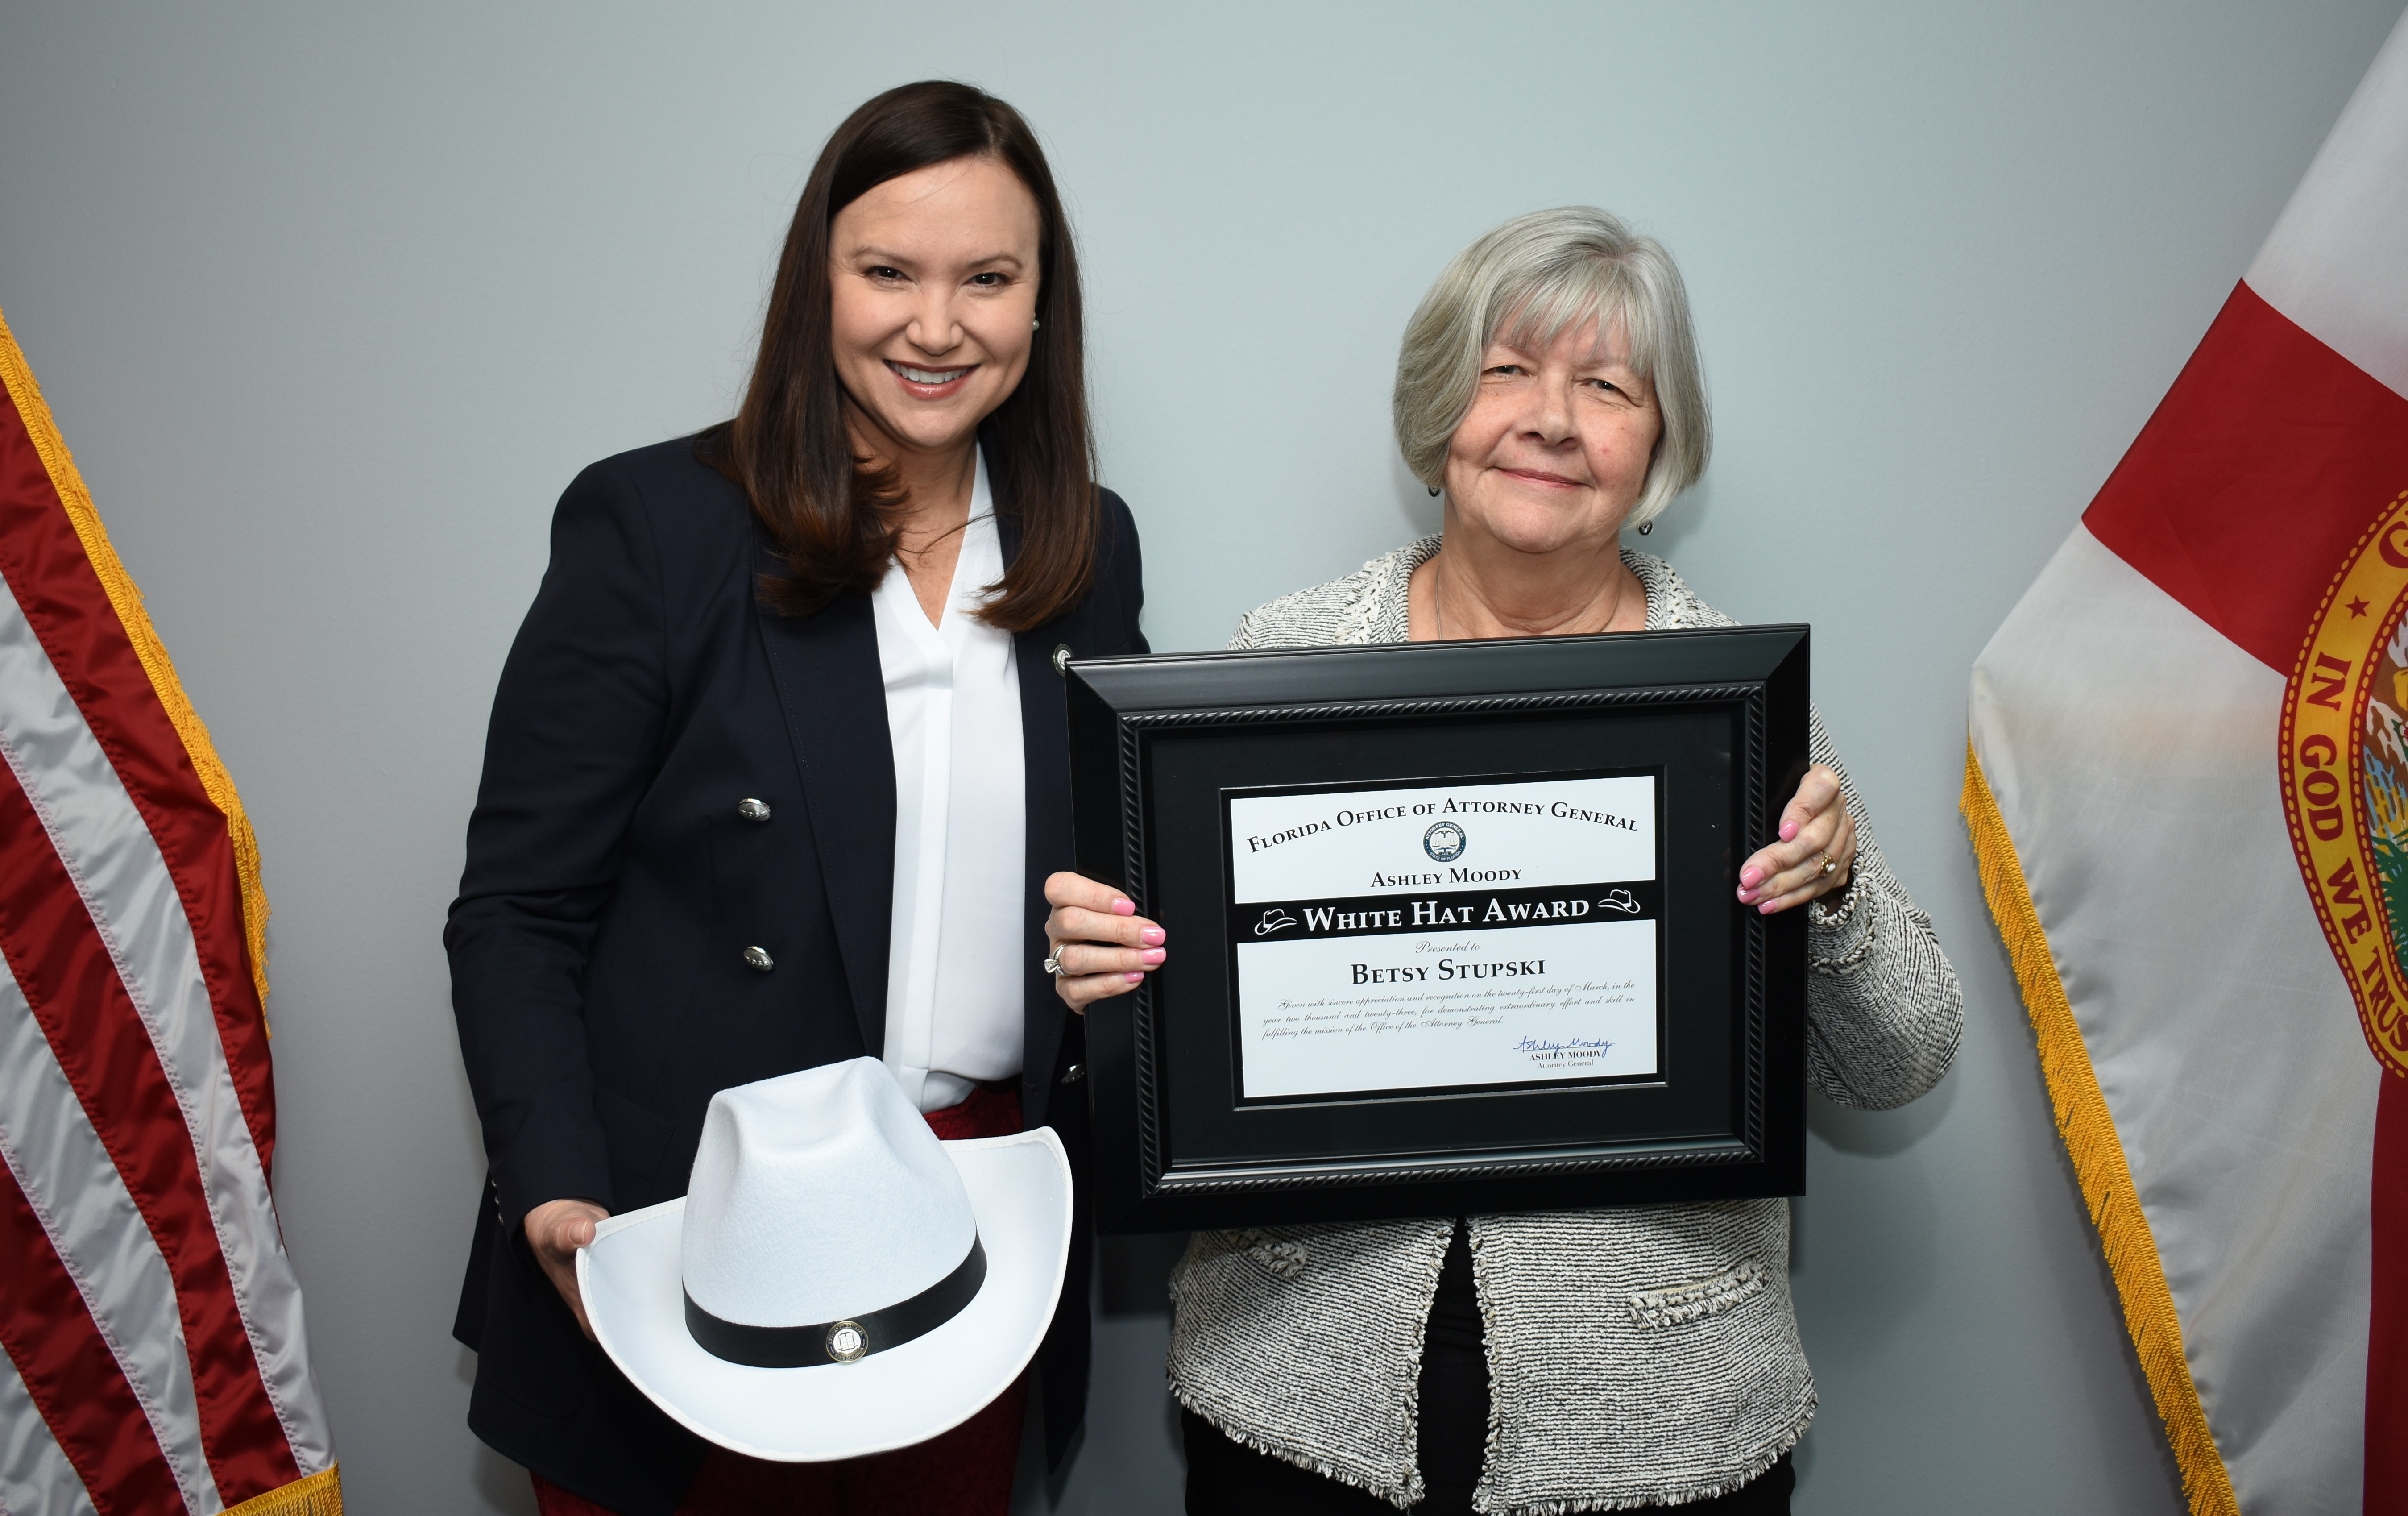 White Hat Award to Law Librarian Betsy Stupski